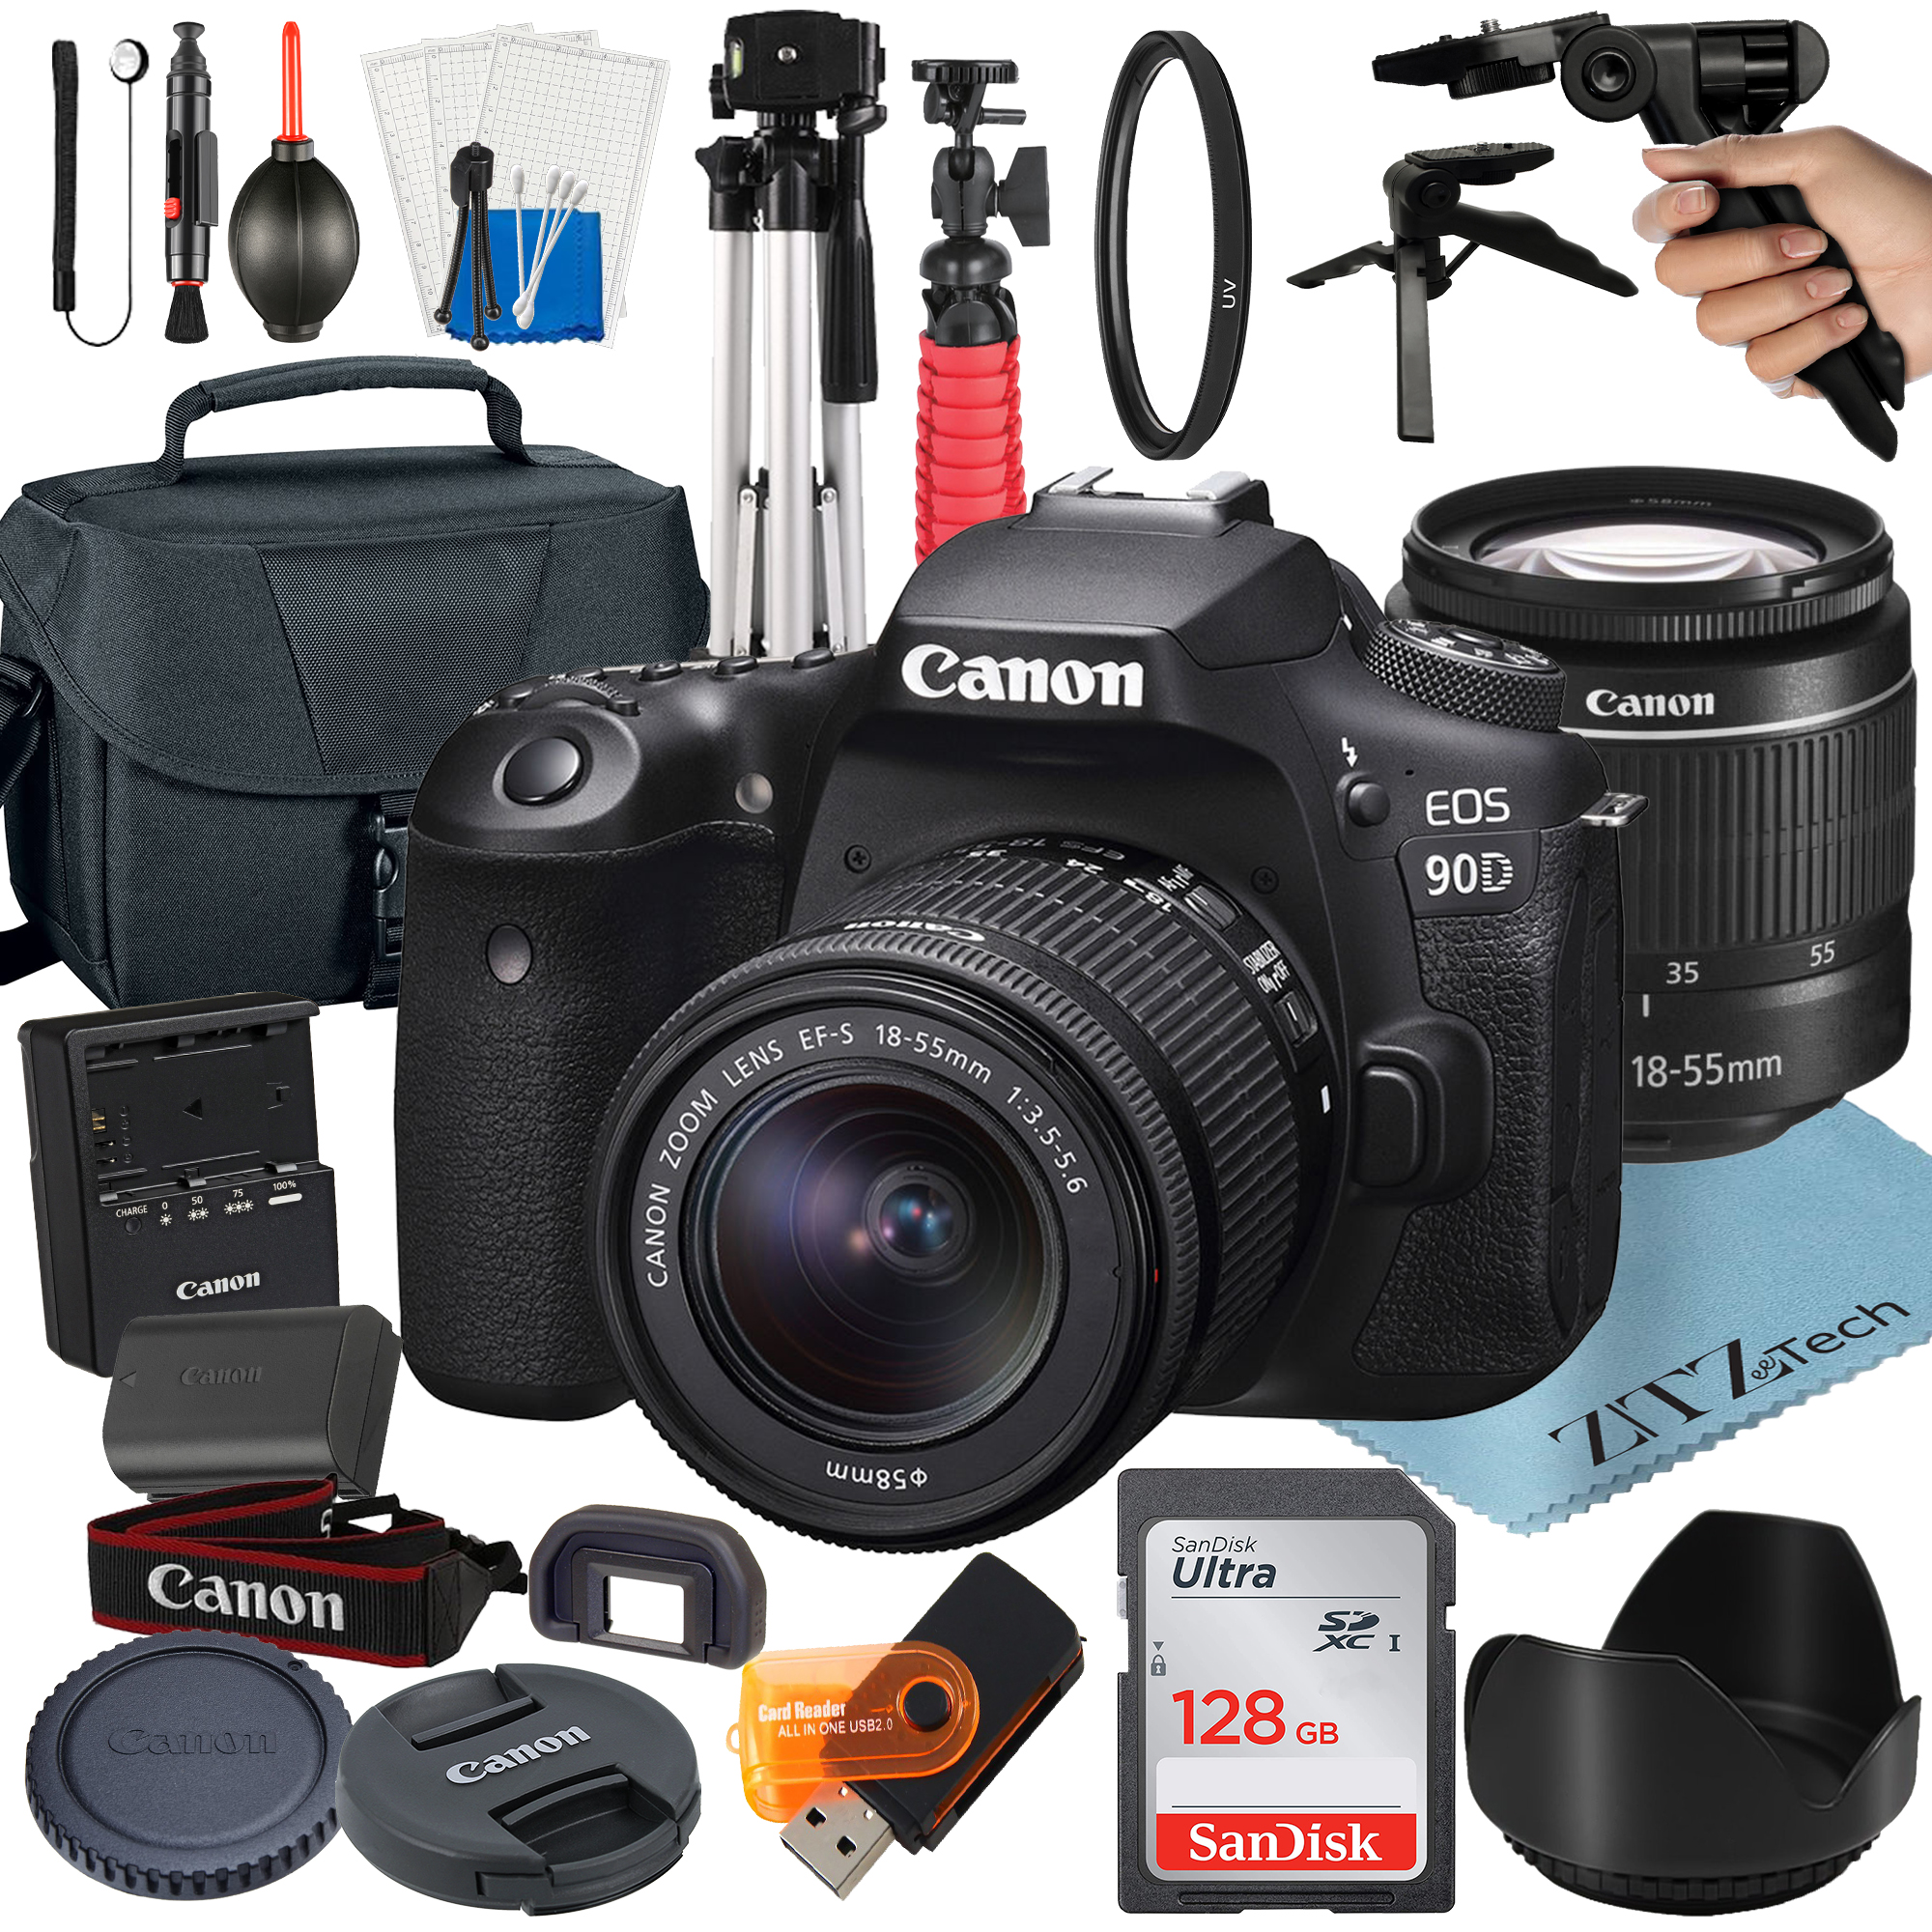 Canon EOS 90D DSLR Camera Bundle with 18-55mm Zoom Lens + 128GB SanDisk Card + Case + Tripod + ZeeTech Accessory